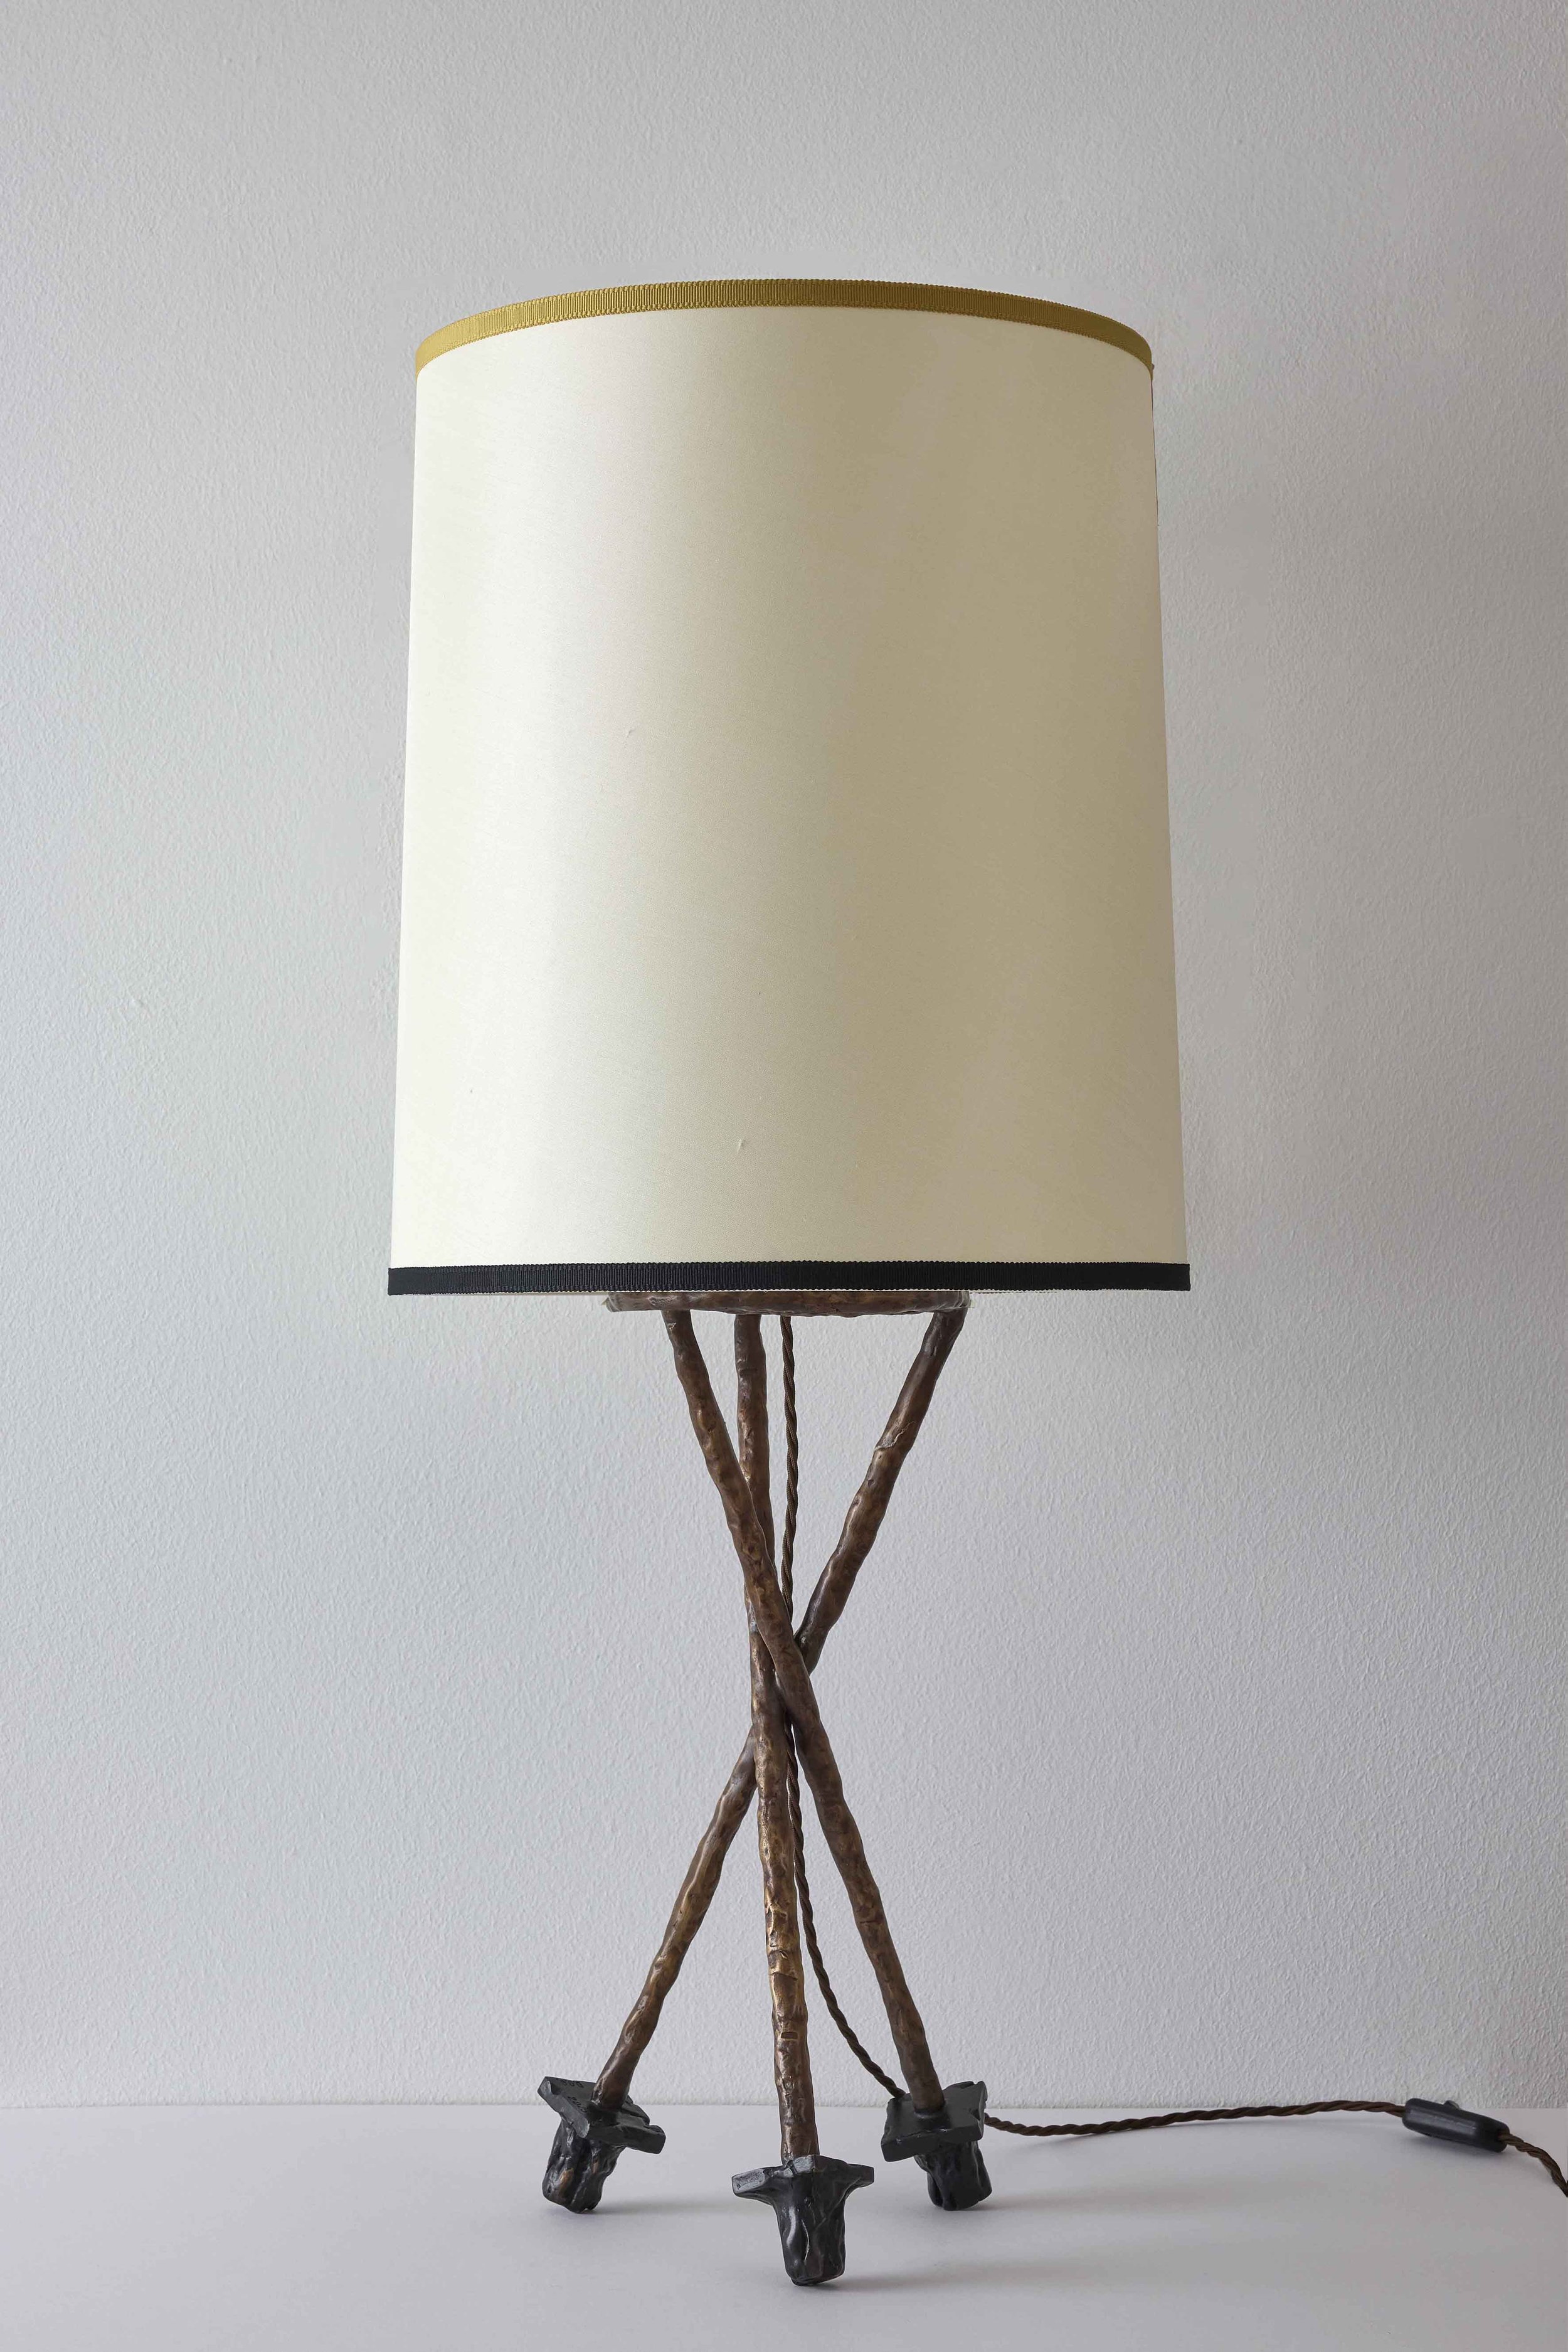 2.MB Table Lamp 'Eaton'.jpg